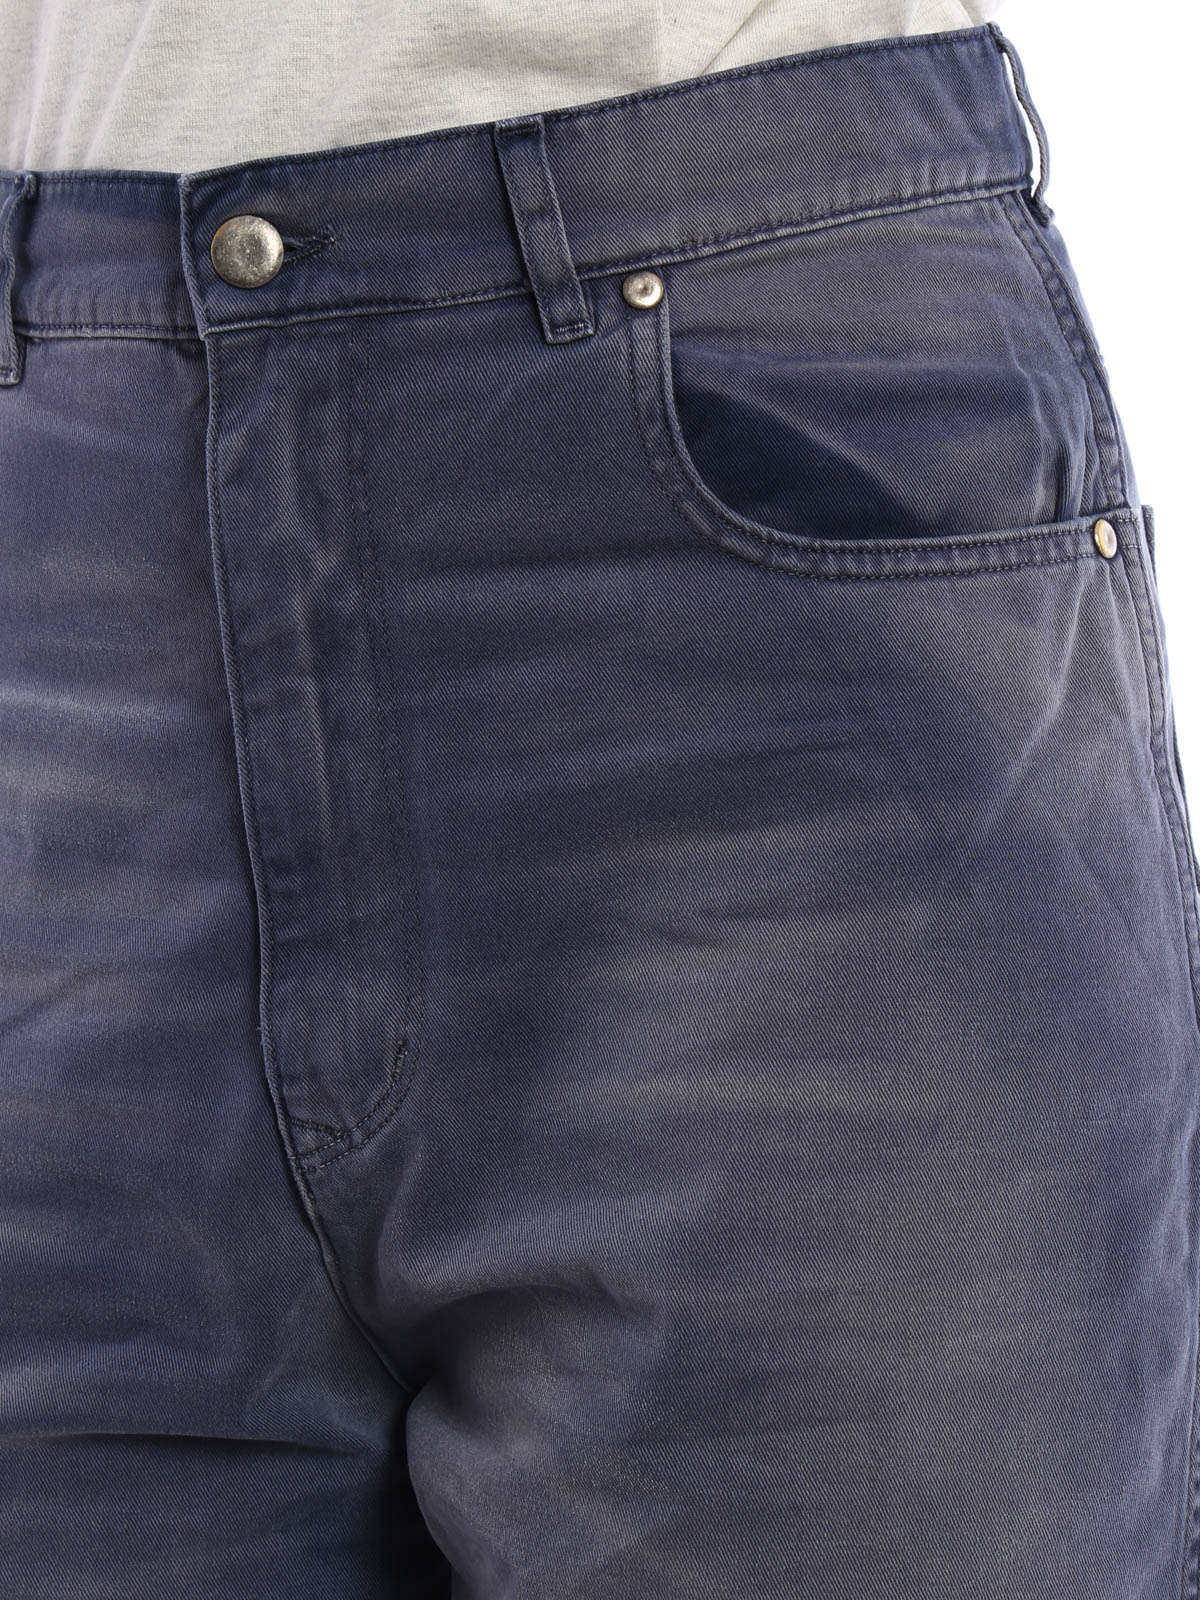 Boyfriend Golden Goose - Patchwork design jeans G28WP007B1